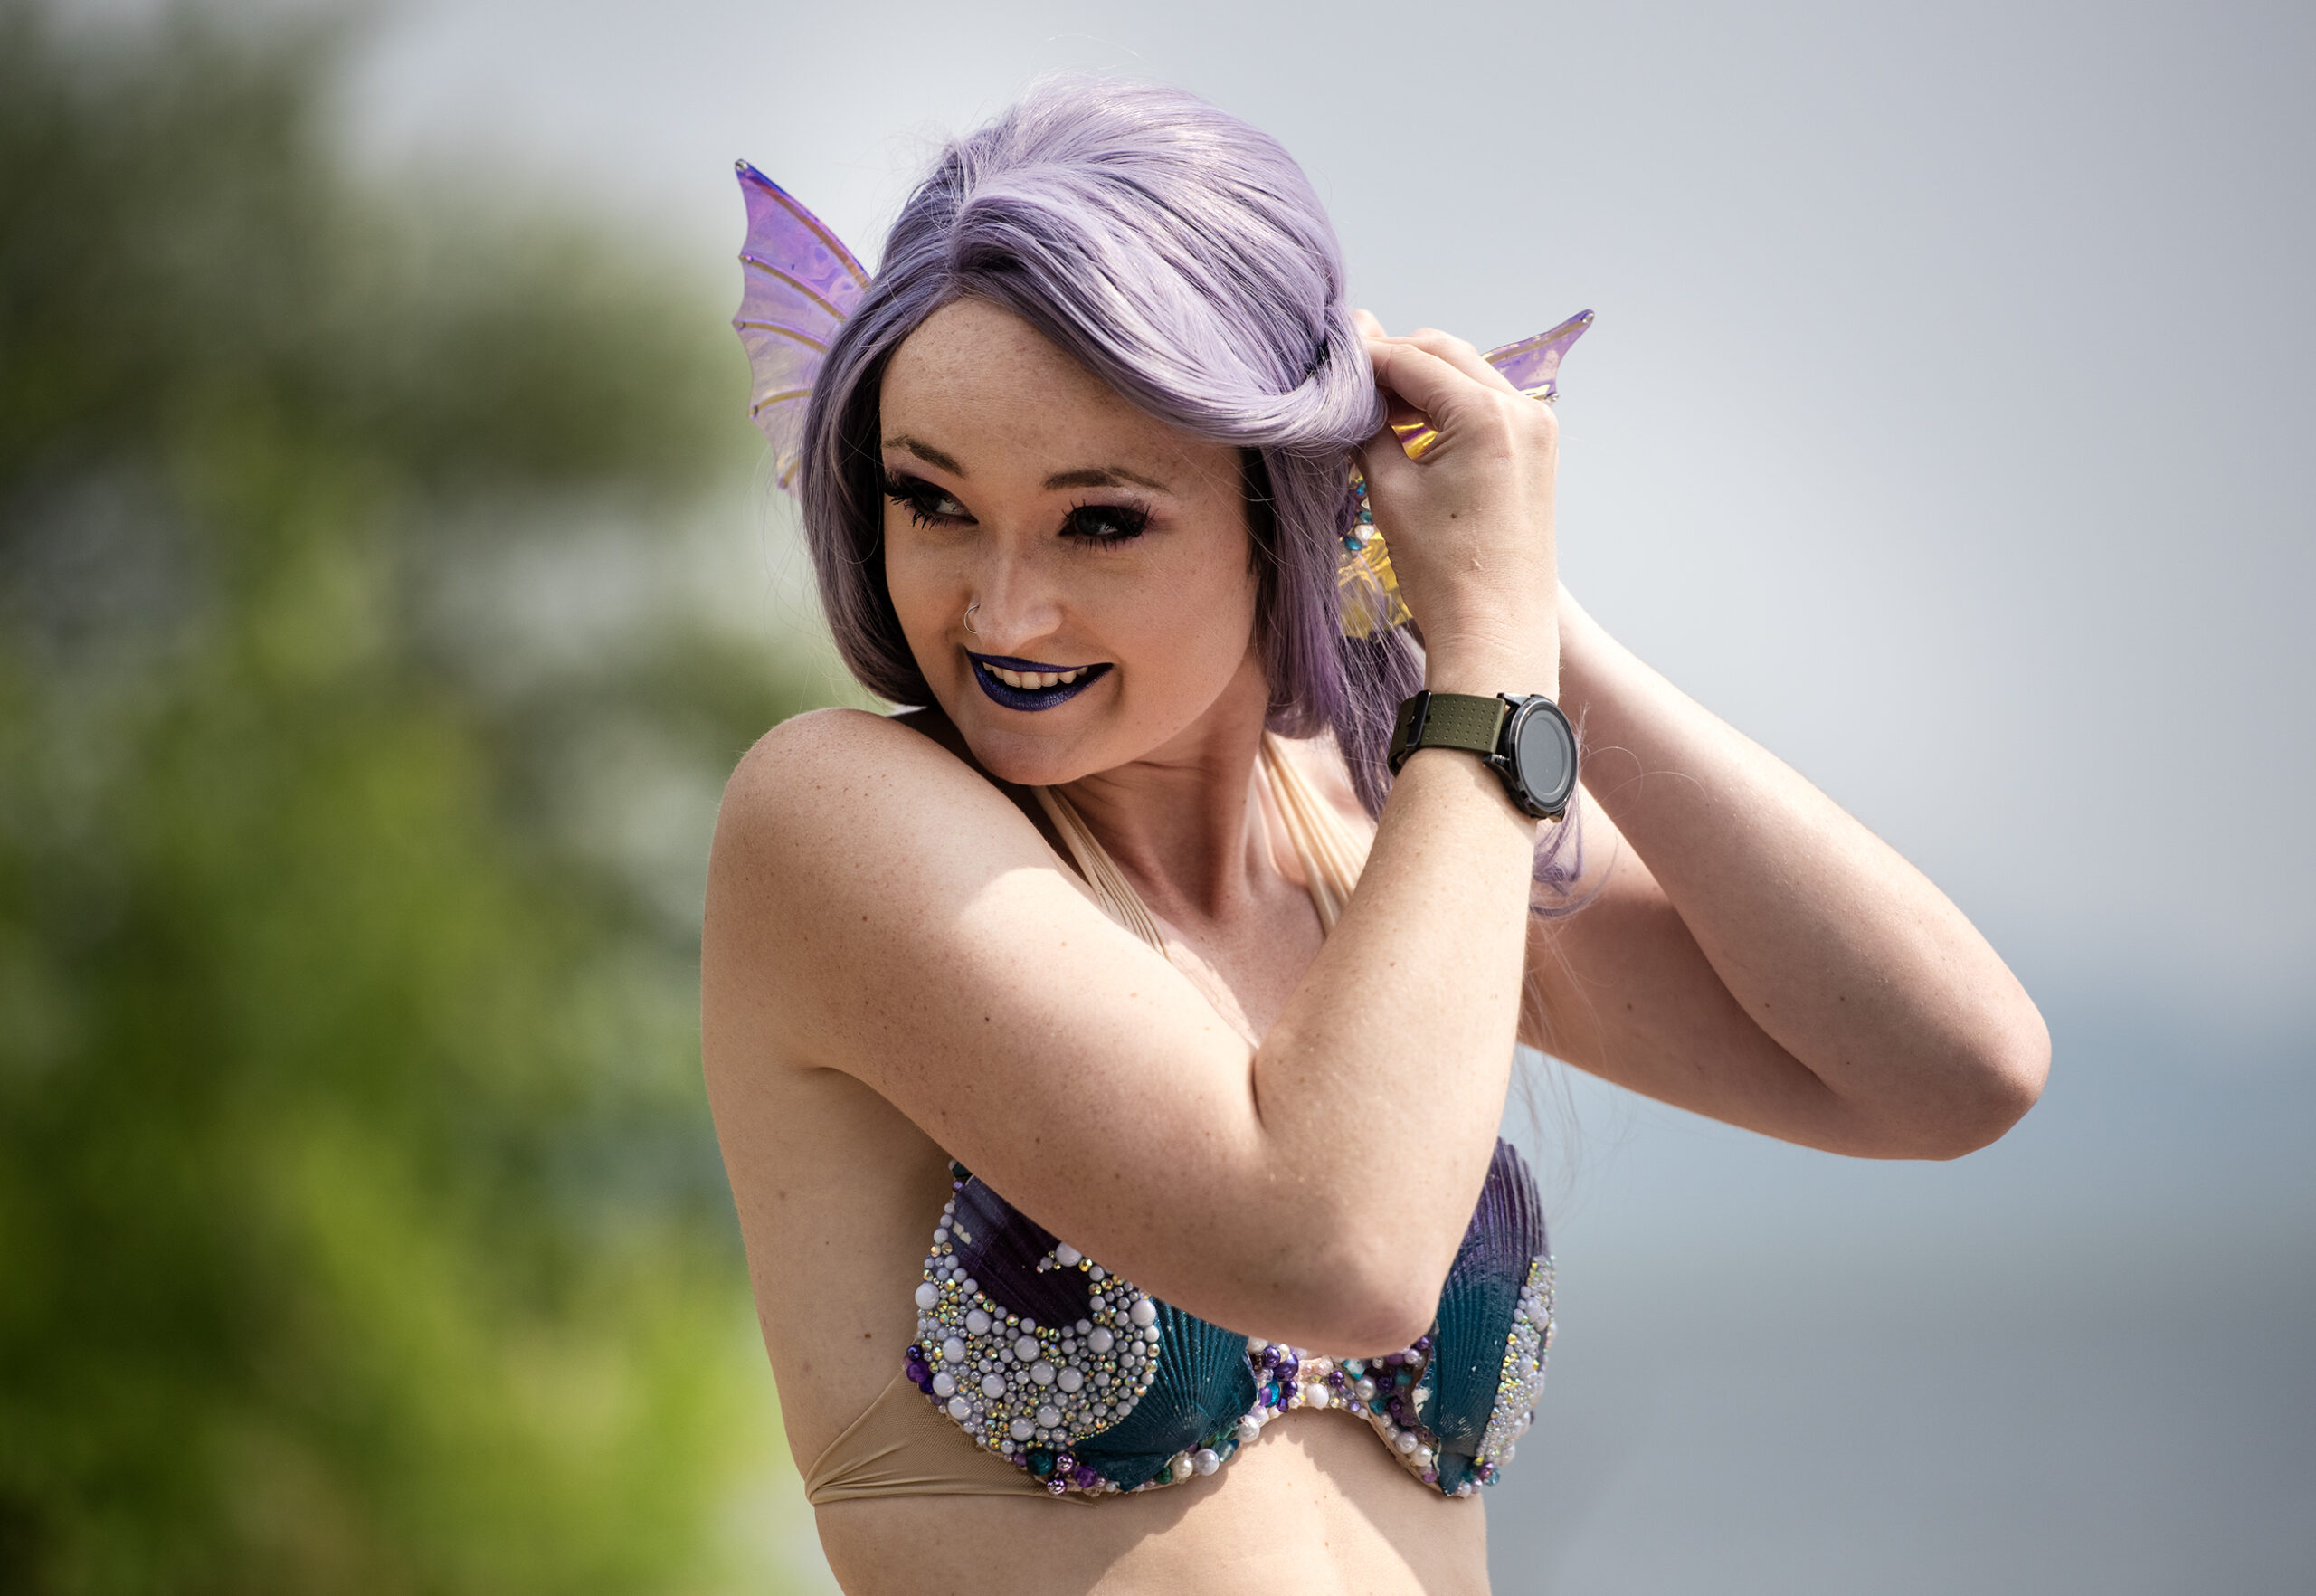 Echo pulls back purple hair while pinning on mermaid ears.